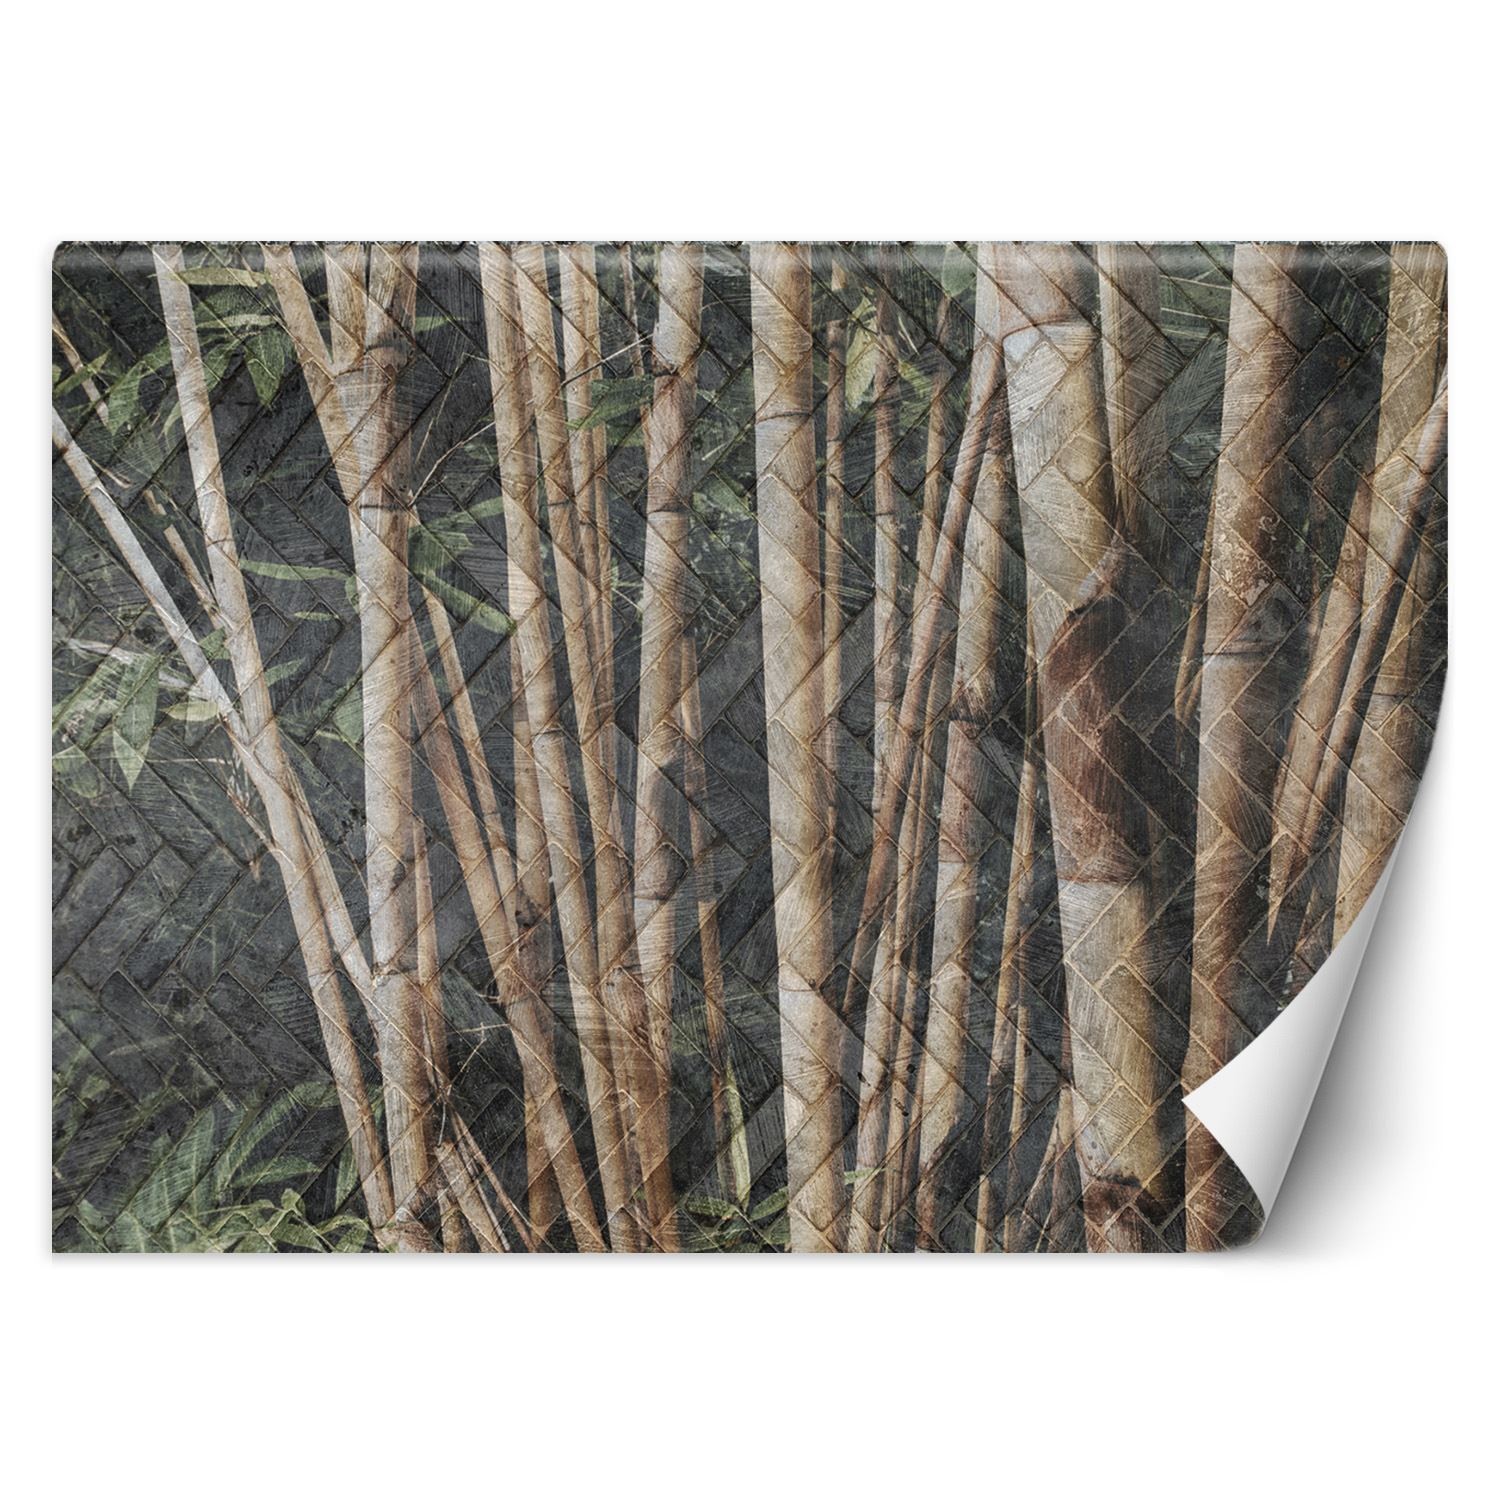 Trend24 – Behang – Bamboo Forest – Vliesbehang – Behang Woonkamer – Fotobehang – 400x280x2 cm – Incl. behanglijm